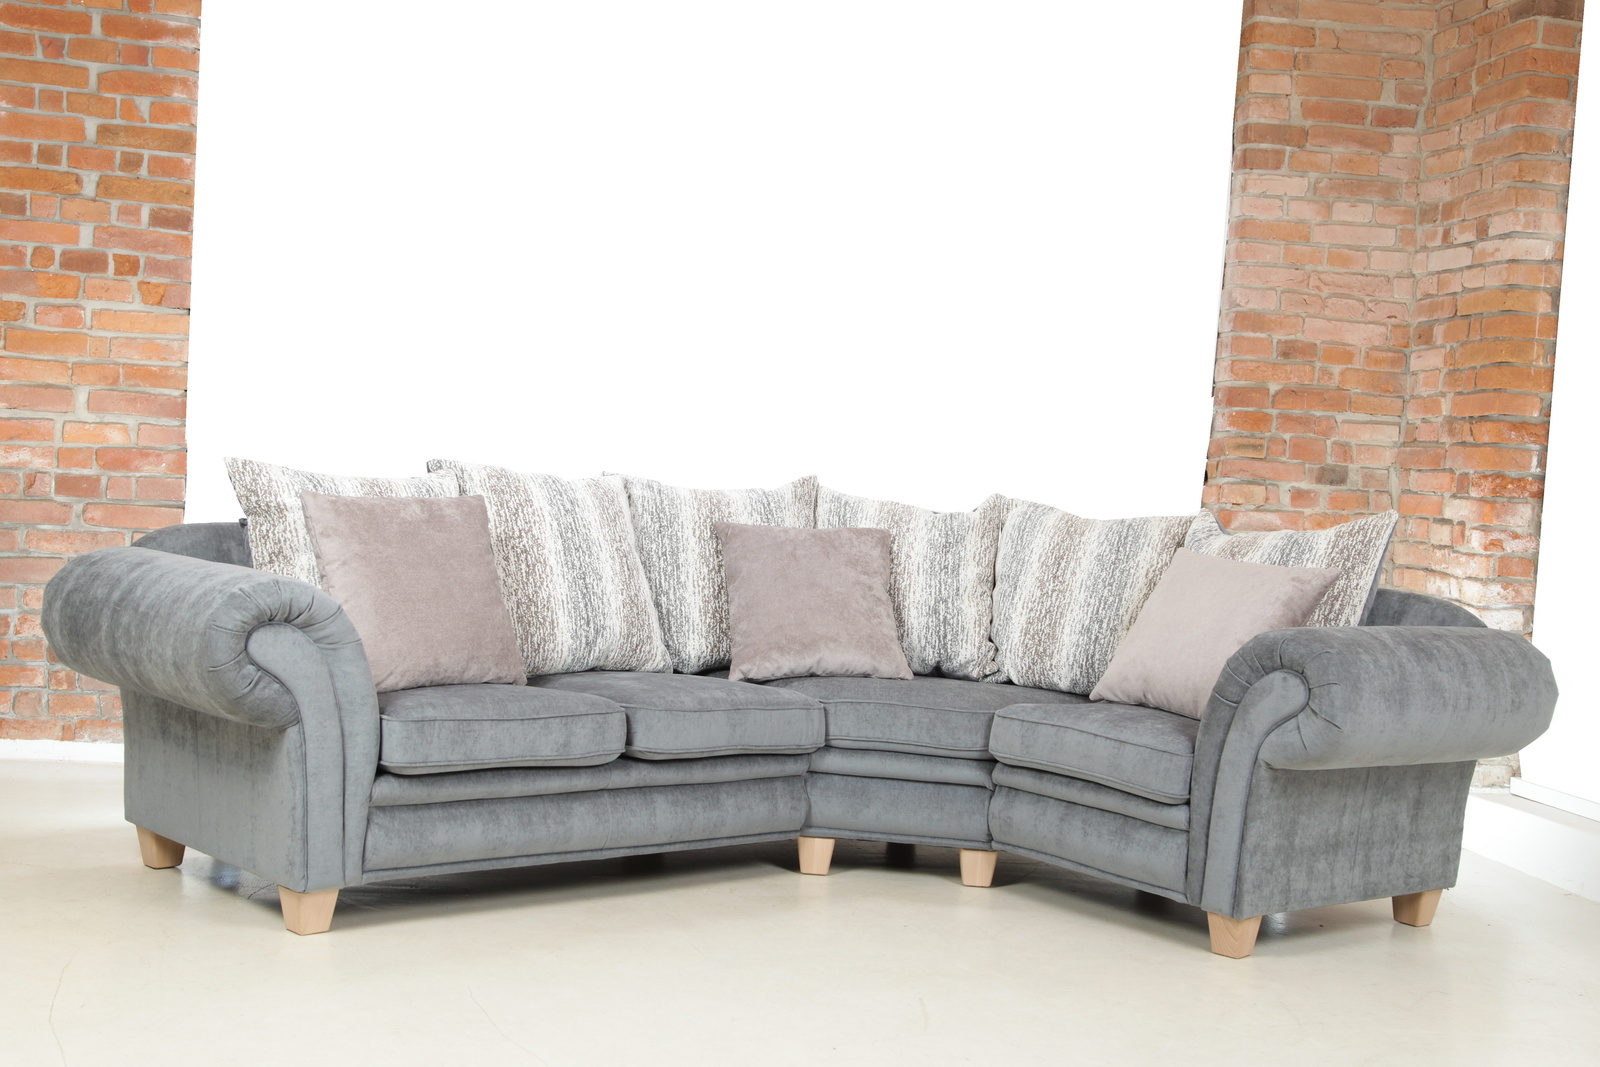 G70 5hvezd chalet  big sofa mega sedaci souprava  gutmann factory abcnabytek.cz img 9287